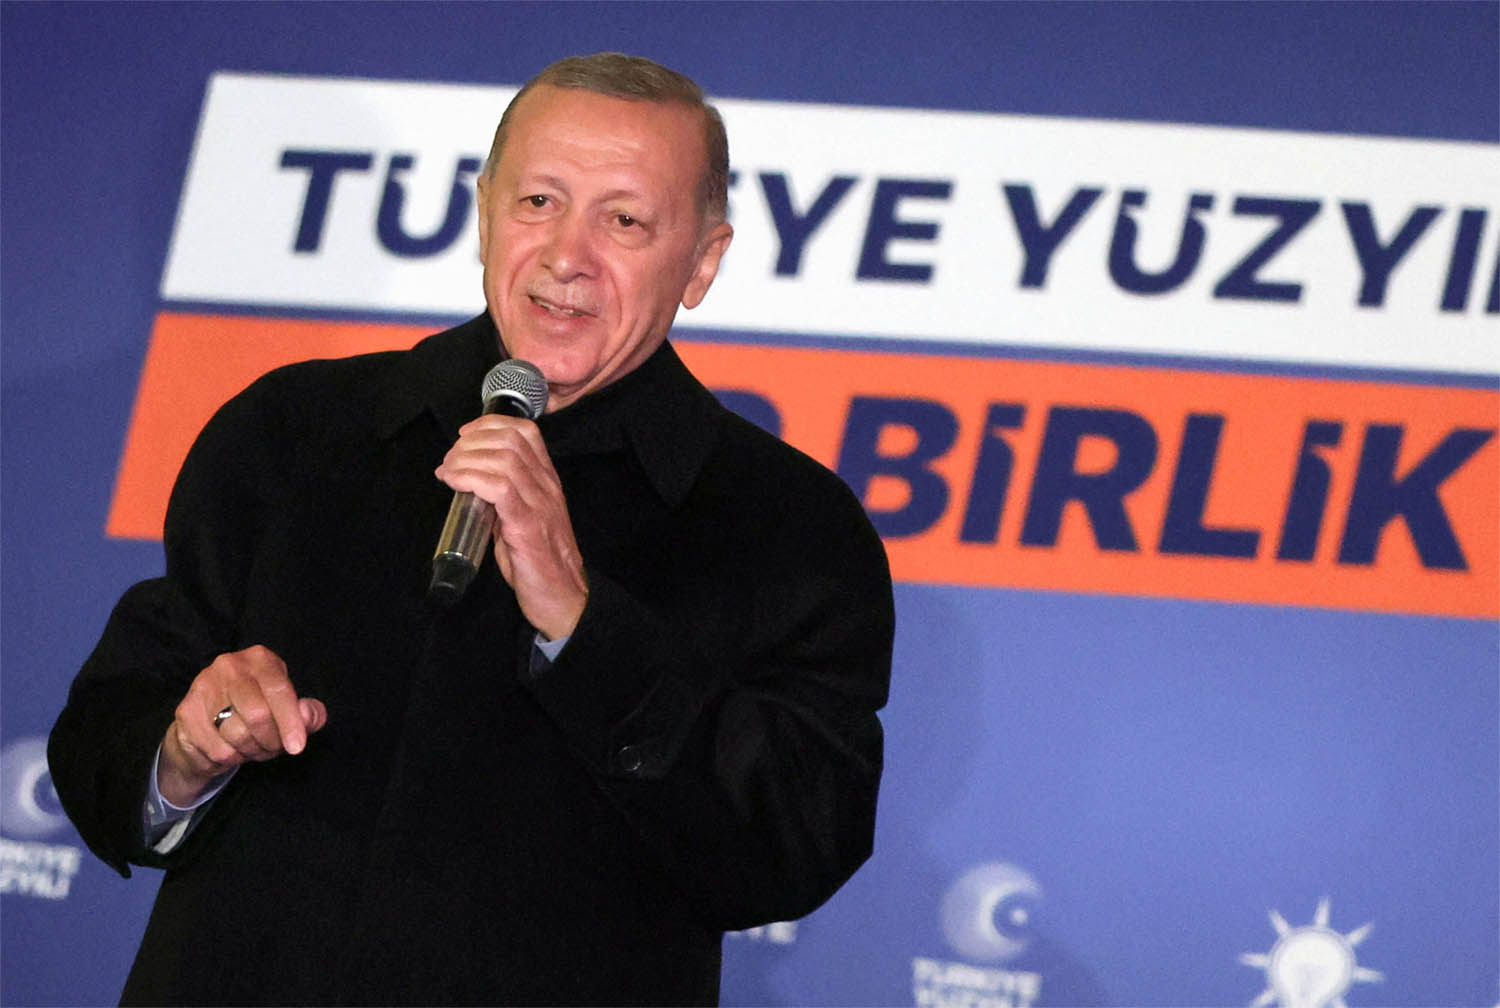 Analysts see Erdogan having advantage in the runoff